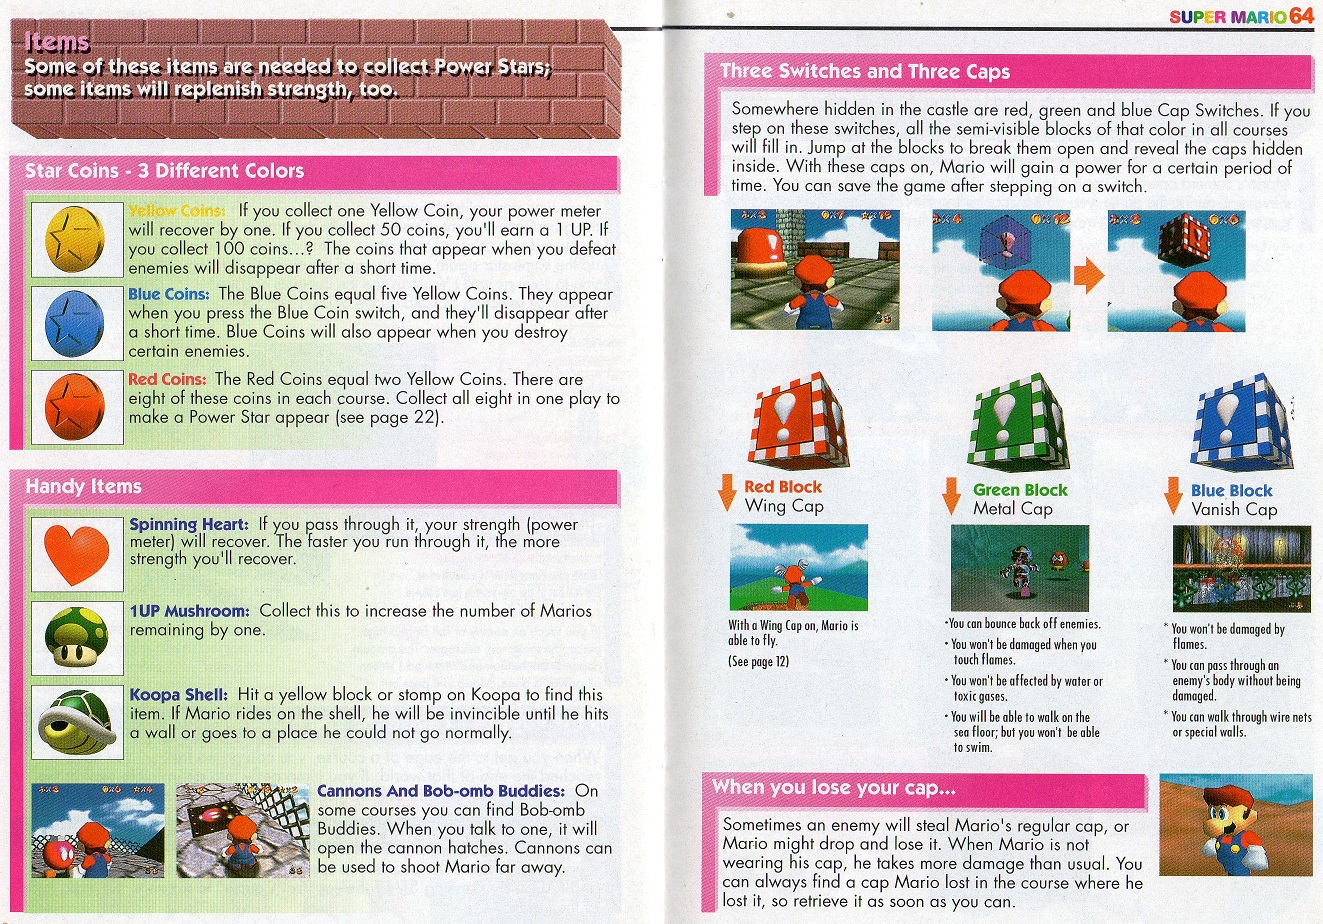 Super Mario 64 manual